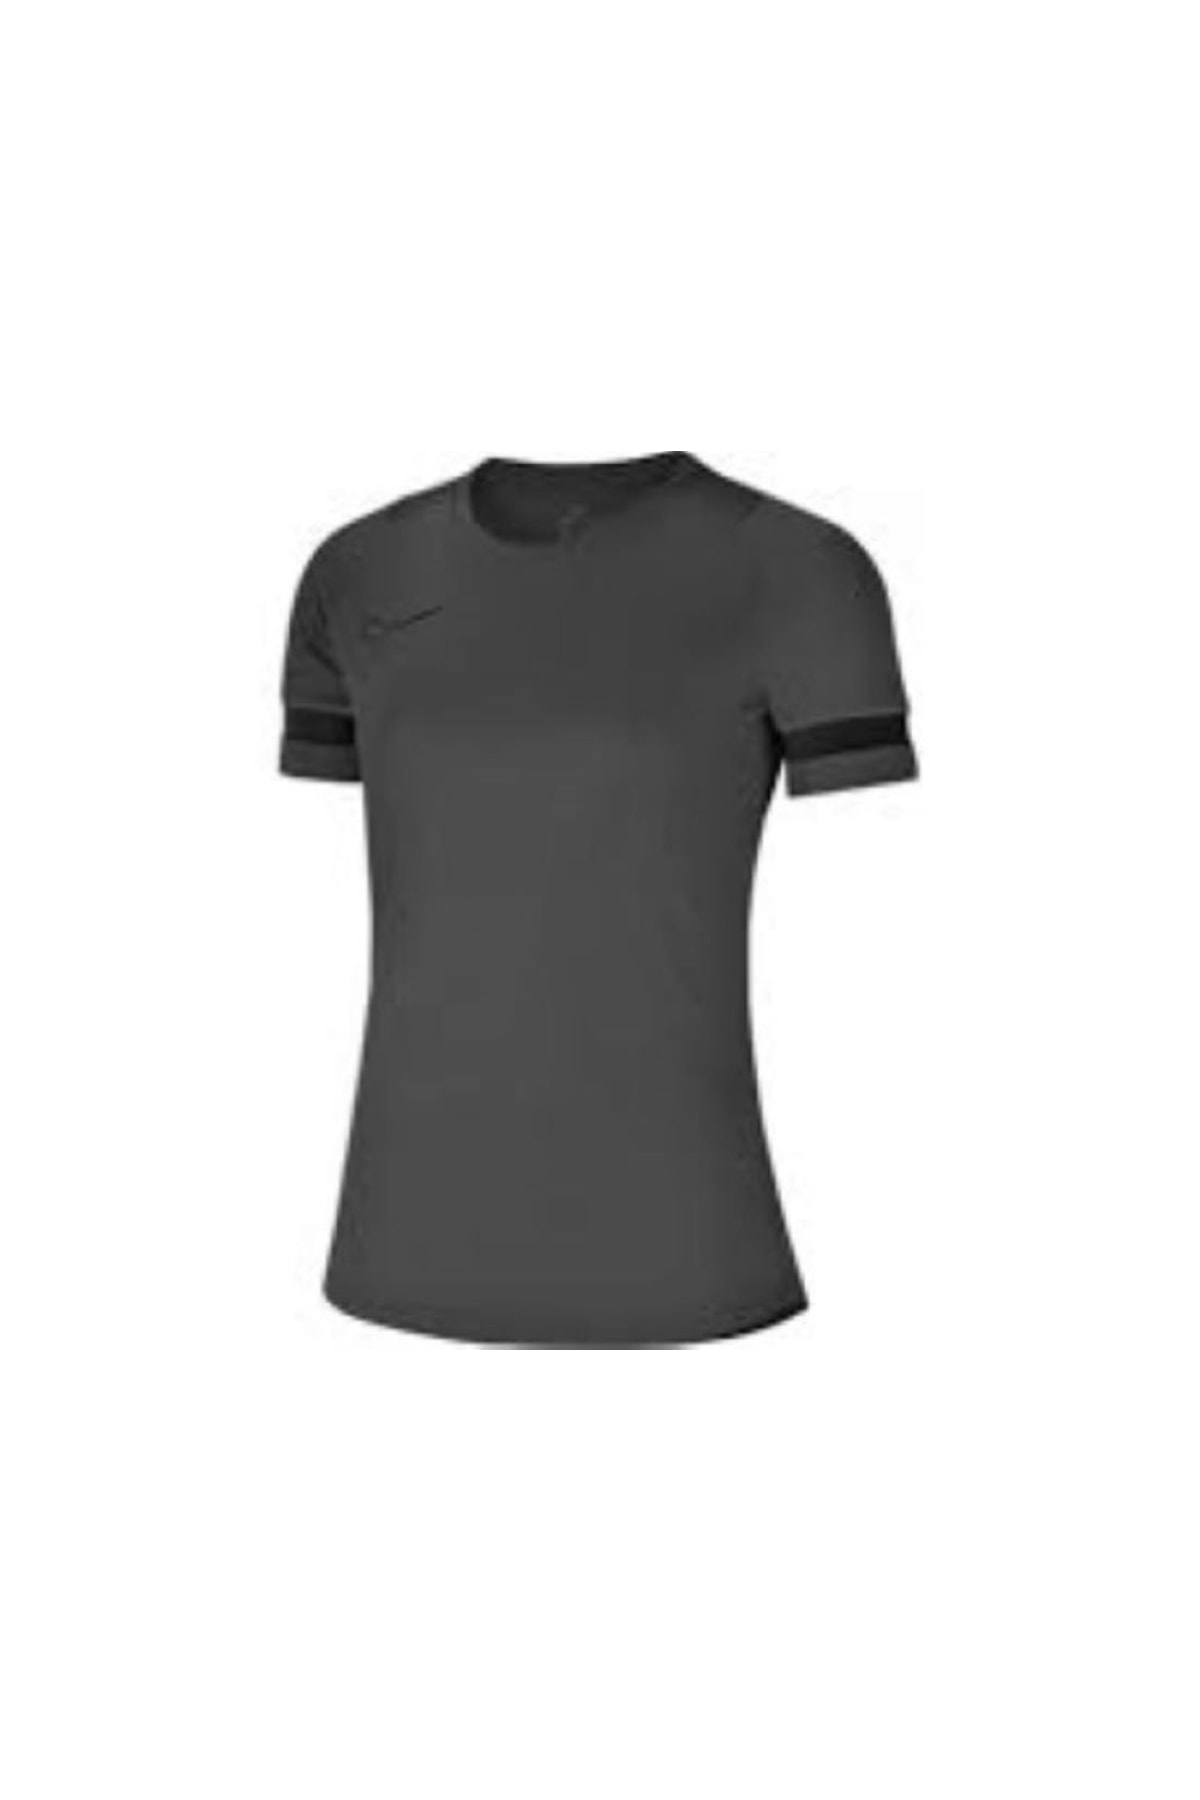 Nike Zoom_out_map Kadın Tişörtü Dri-fıt Academy Siyah Cv2627 060